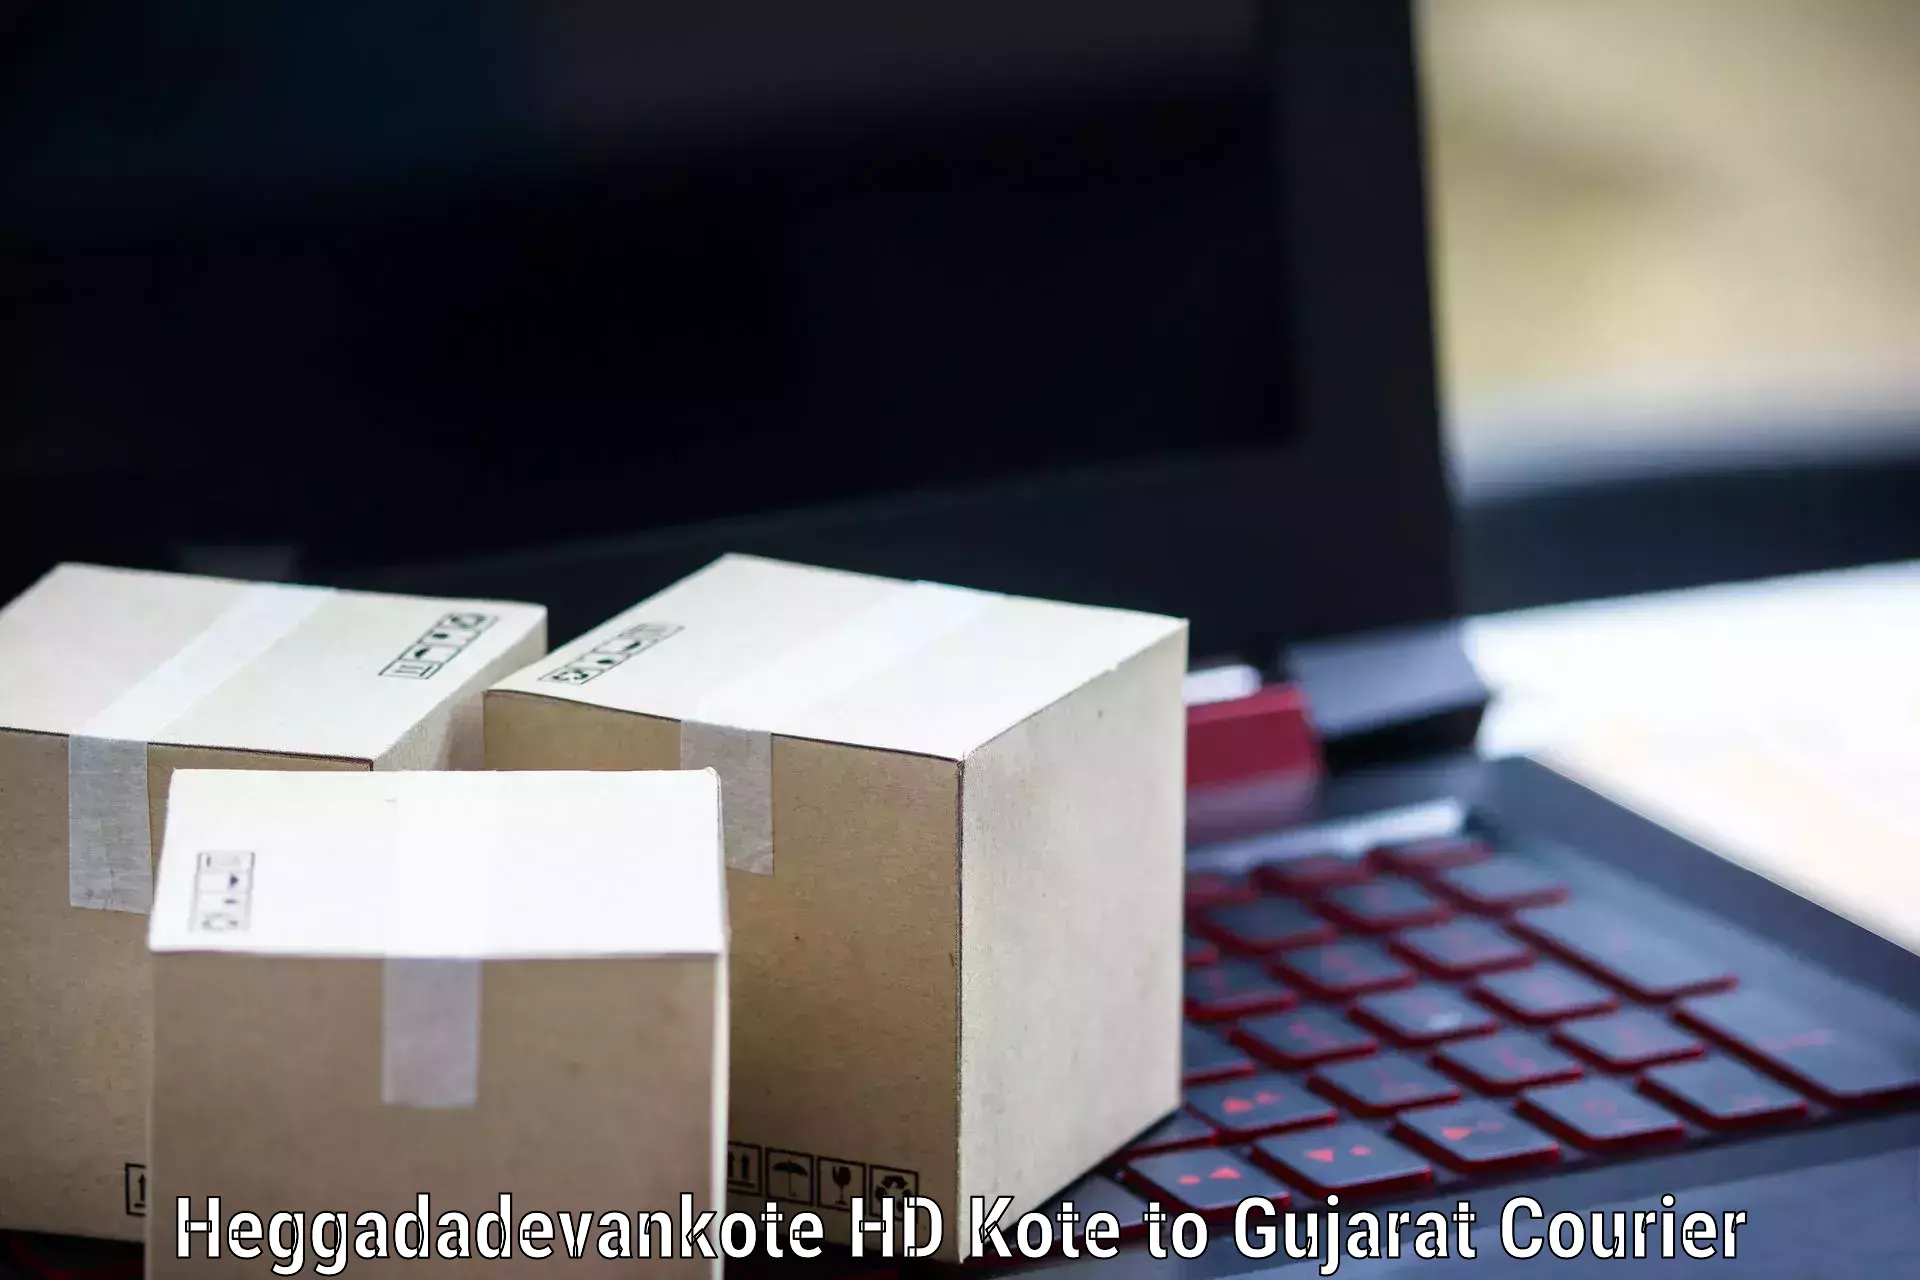 Affordable parcel service Heggadadevankote HD Kote to Gandhidham